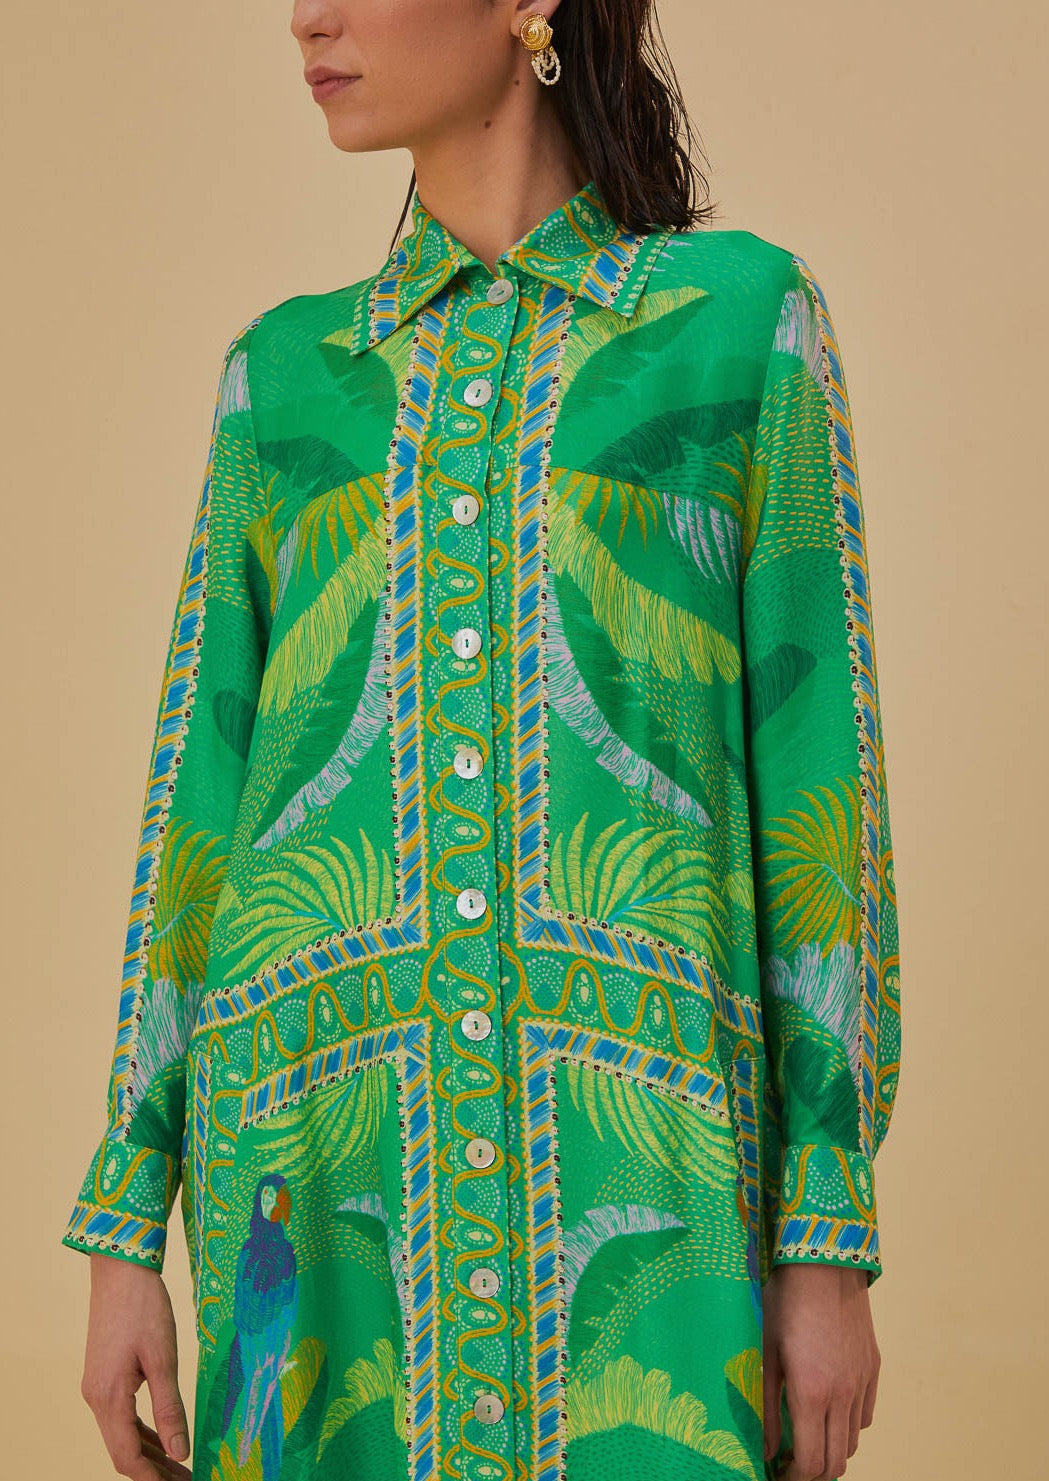 Macaw Scarf Green Chemise Dress